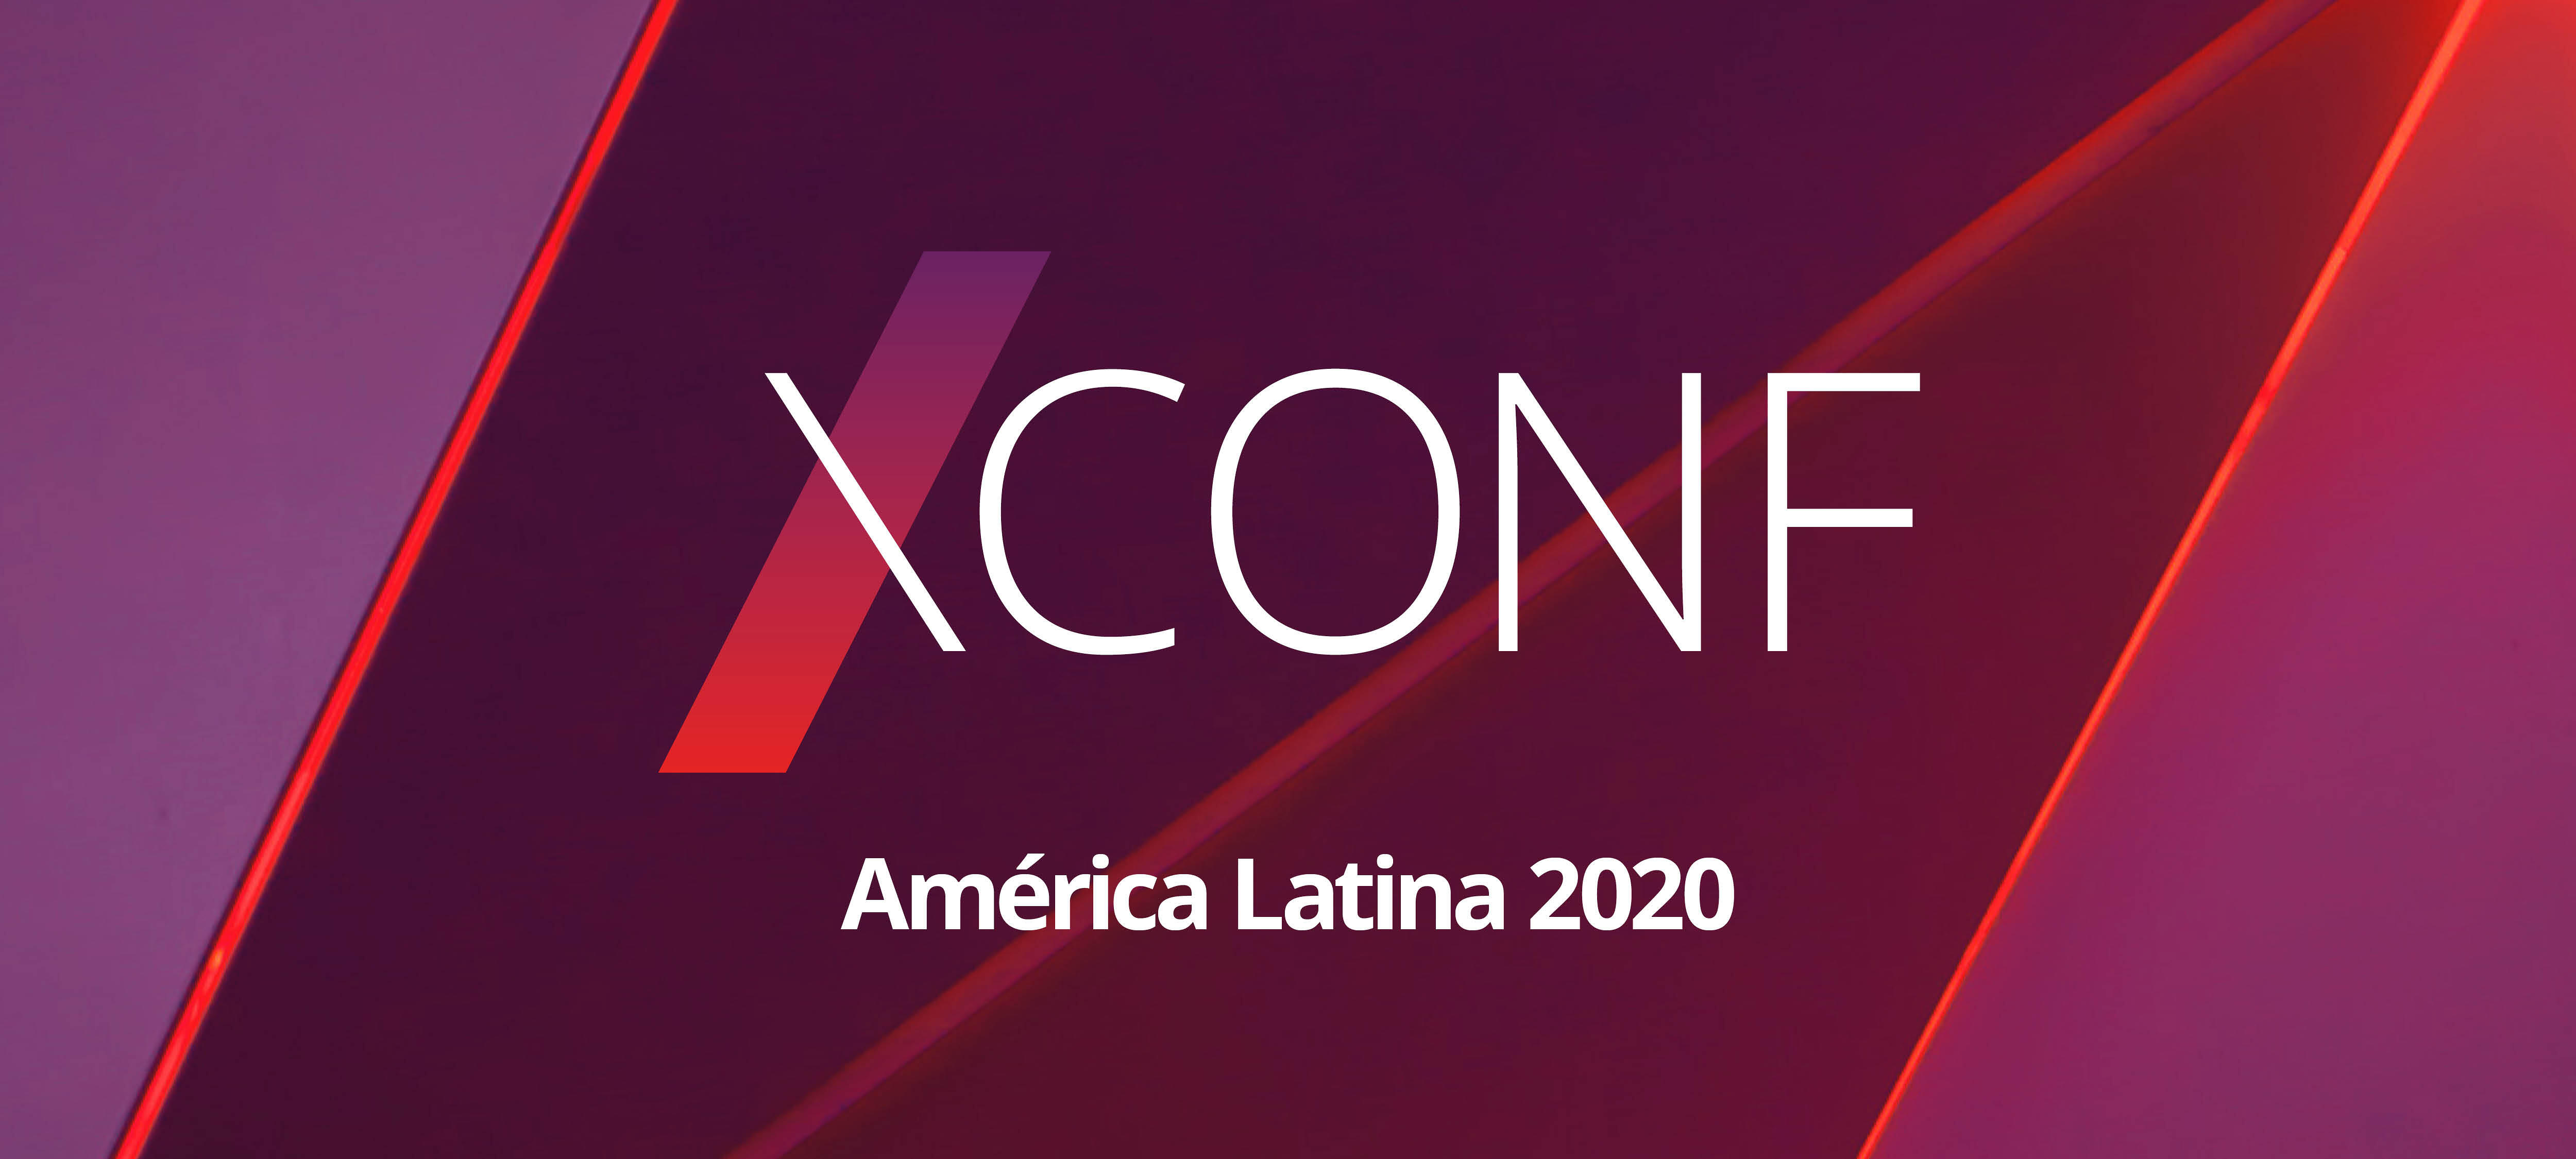 Xconf América Latina | Online 2020